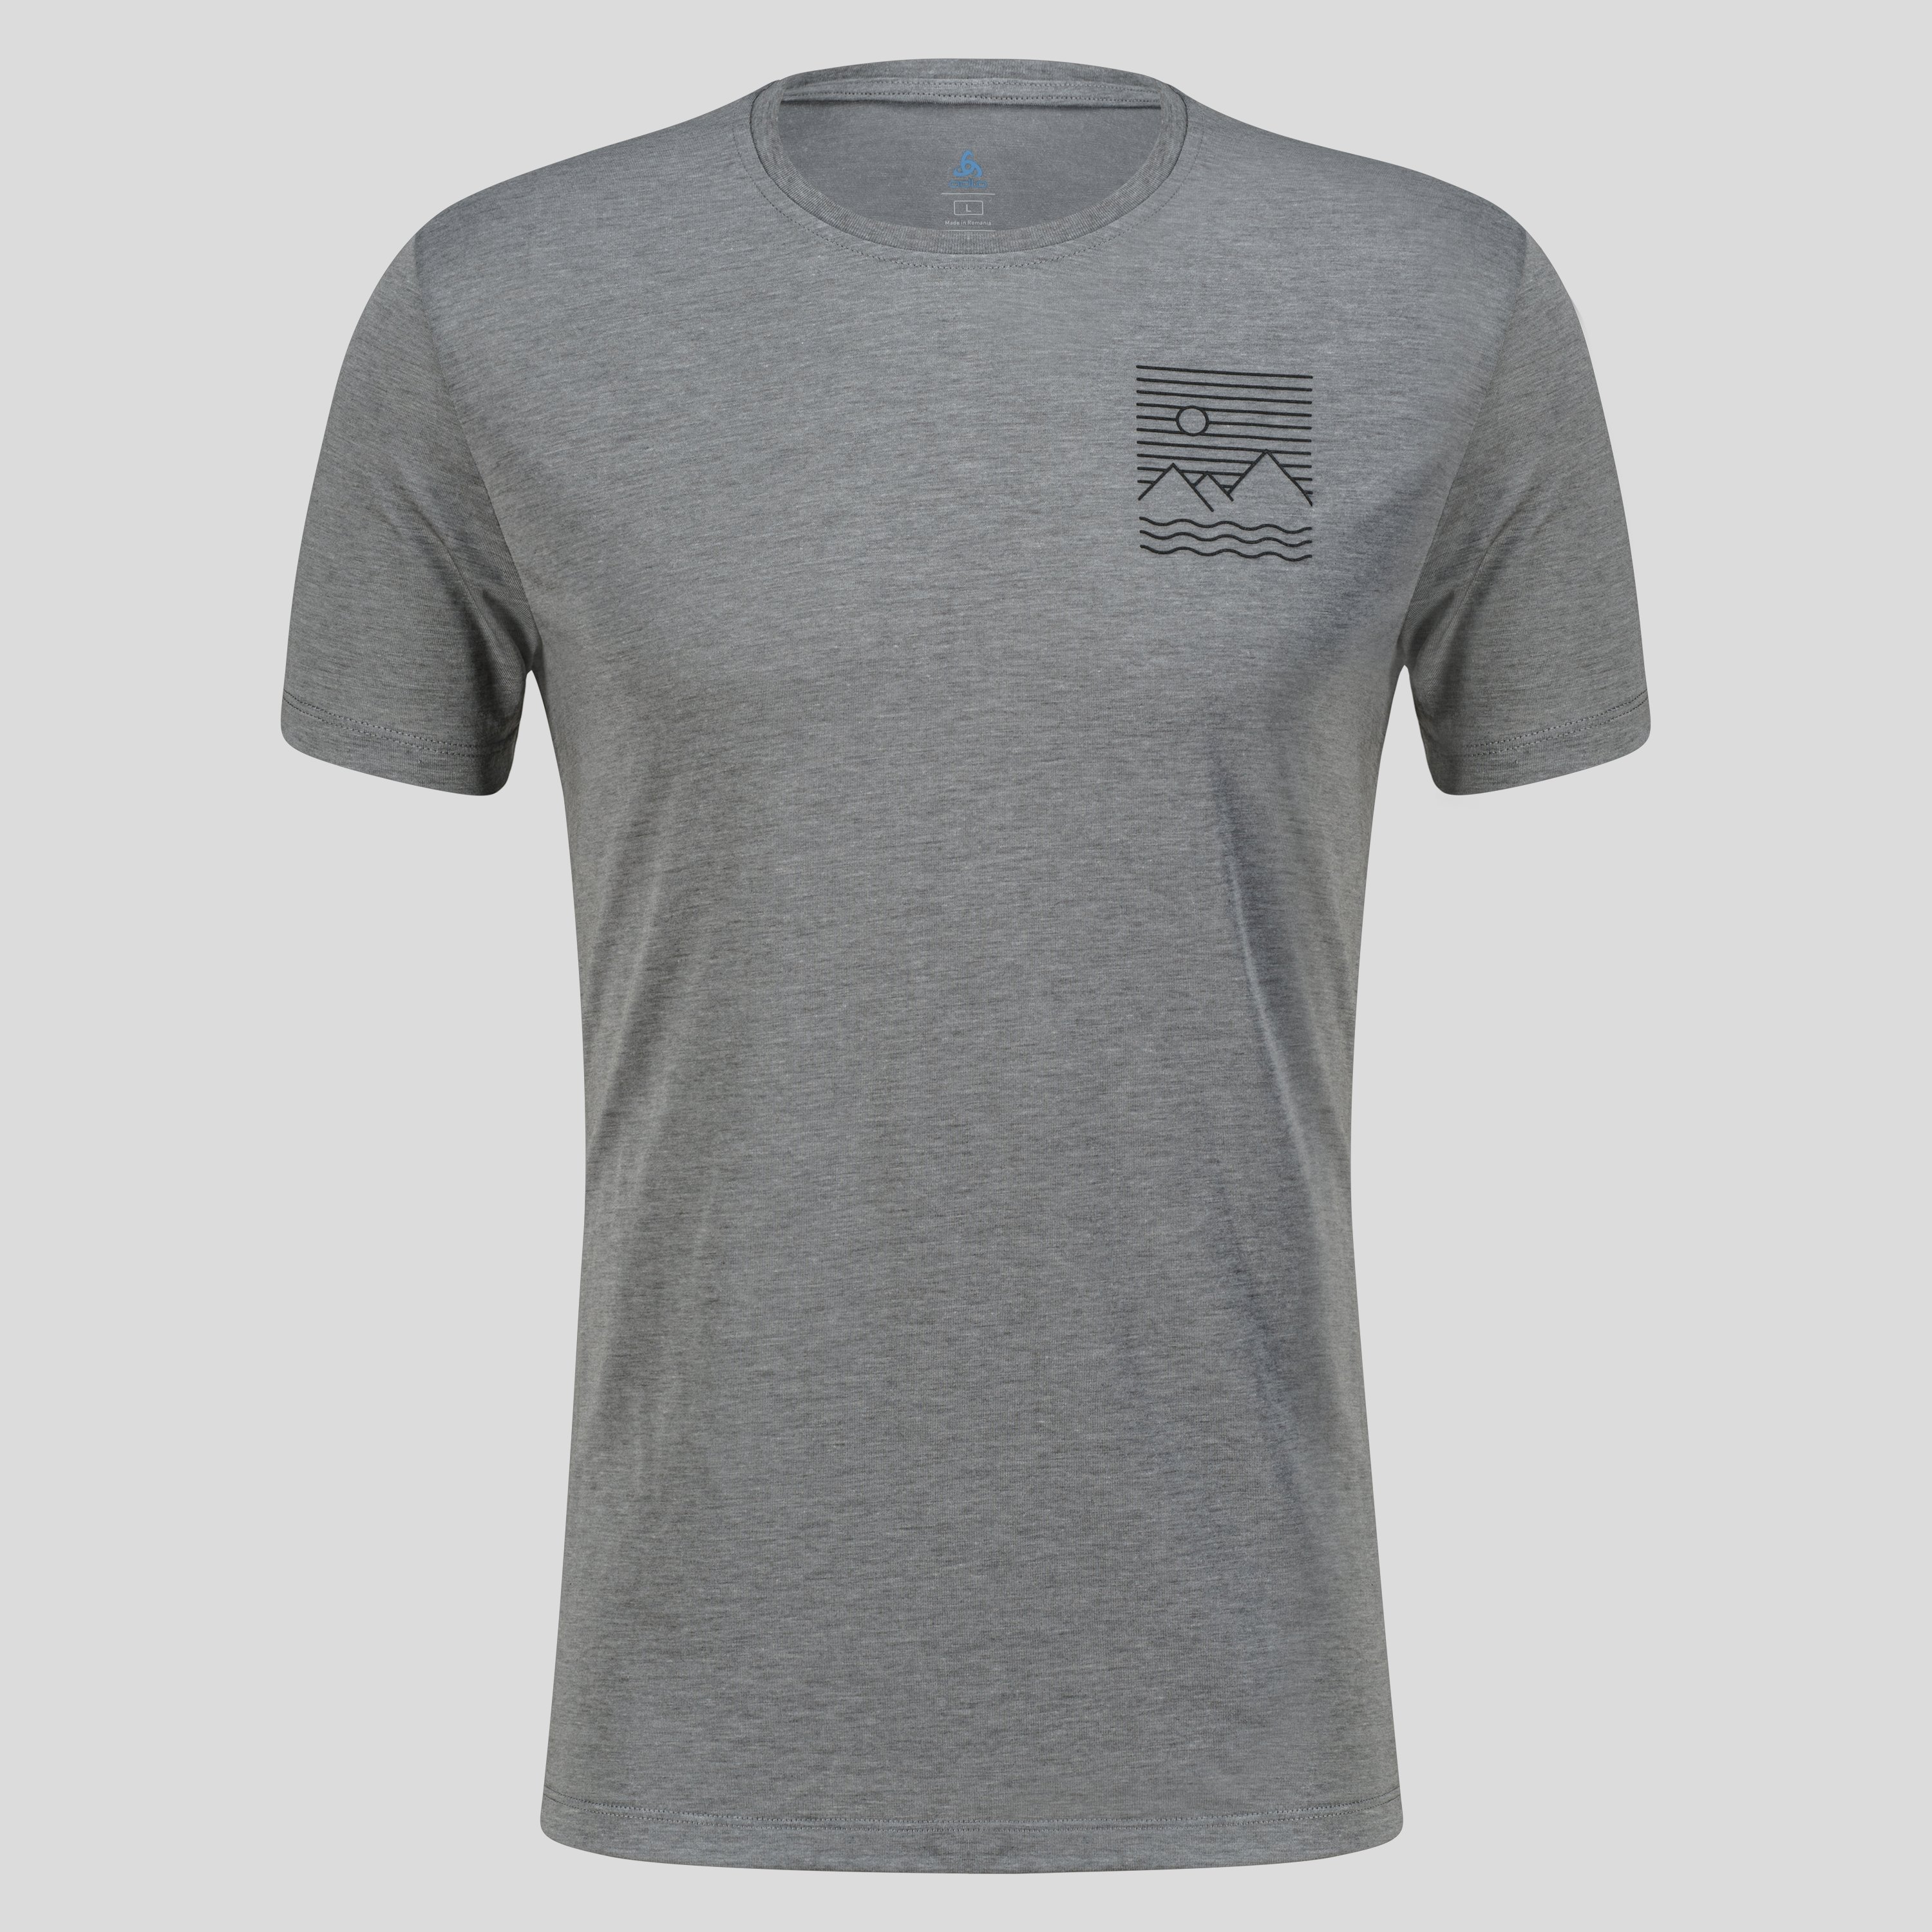 ODLO Ascent 365 T-Shirt mit linearem Landschaftsprint für Herren, S, grau